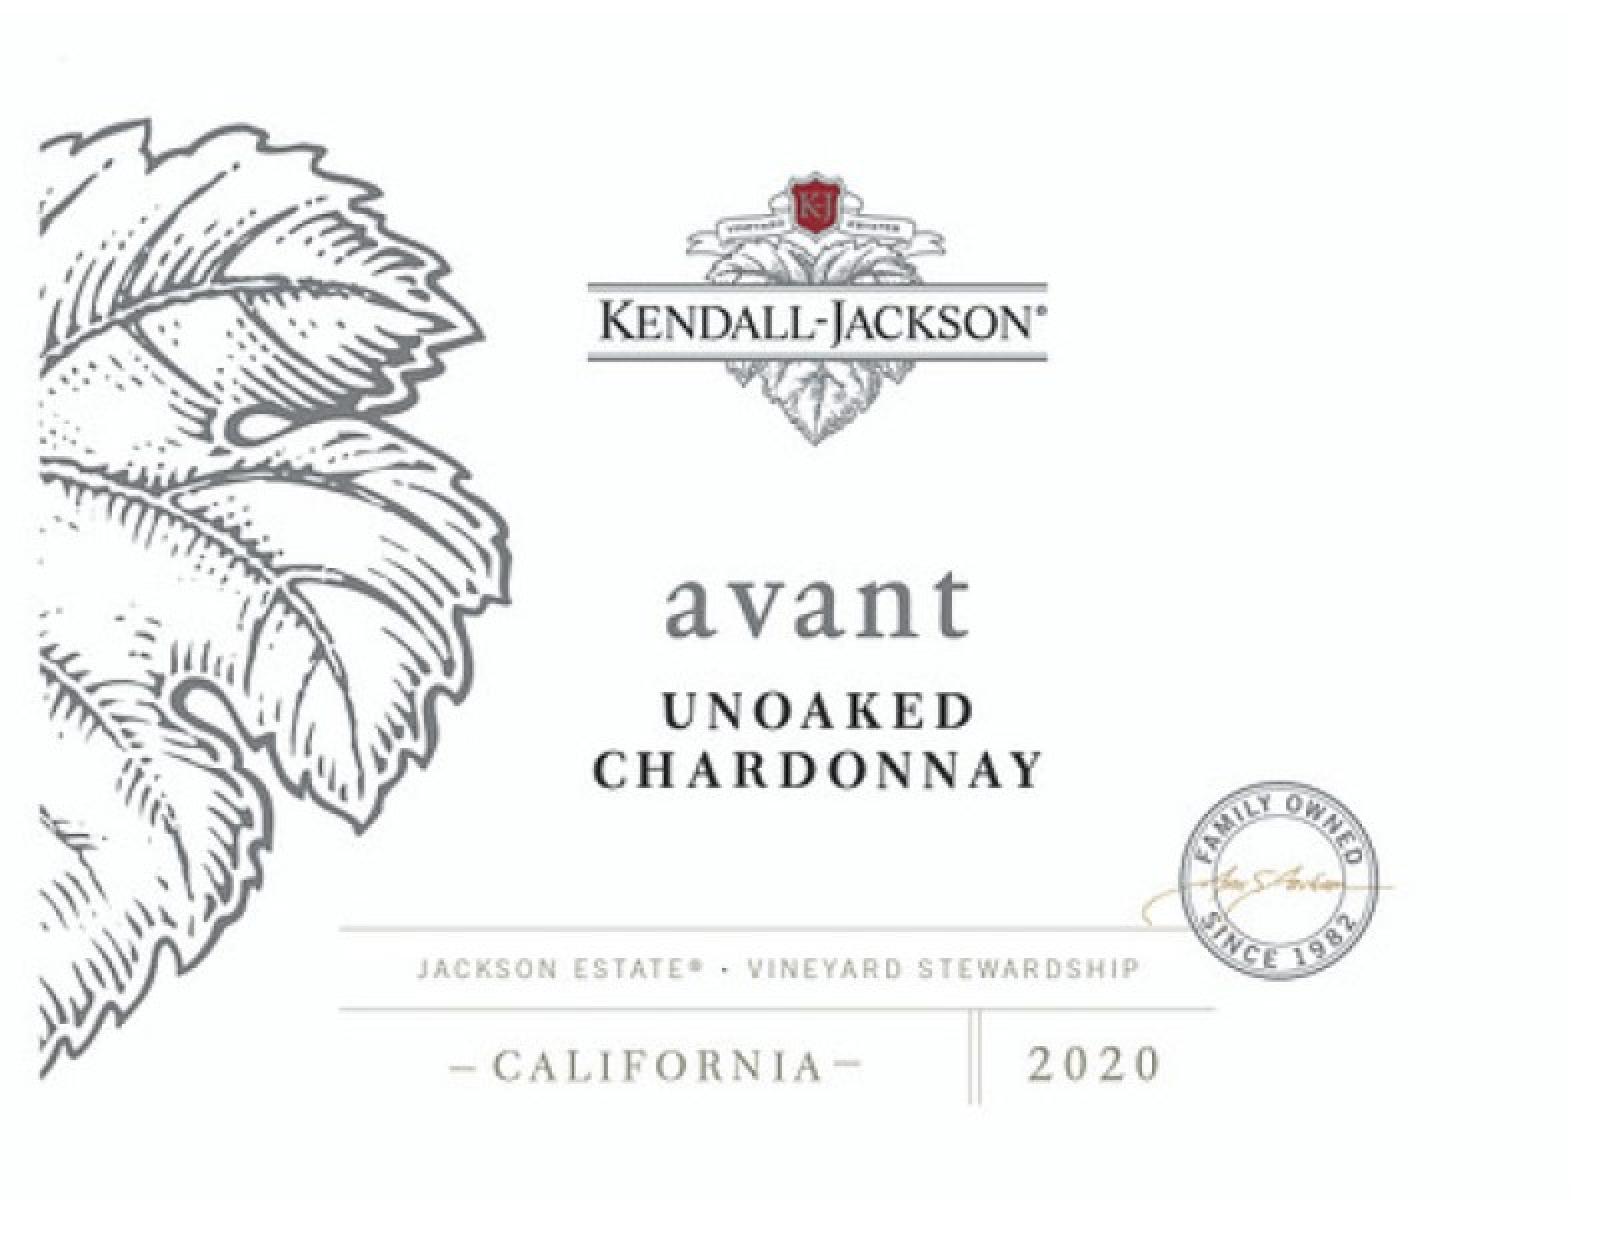 Kendall-Jackson Avant Unoaked Chardonnay 2020